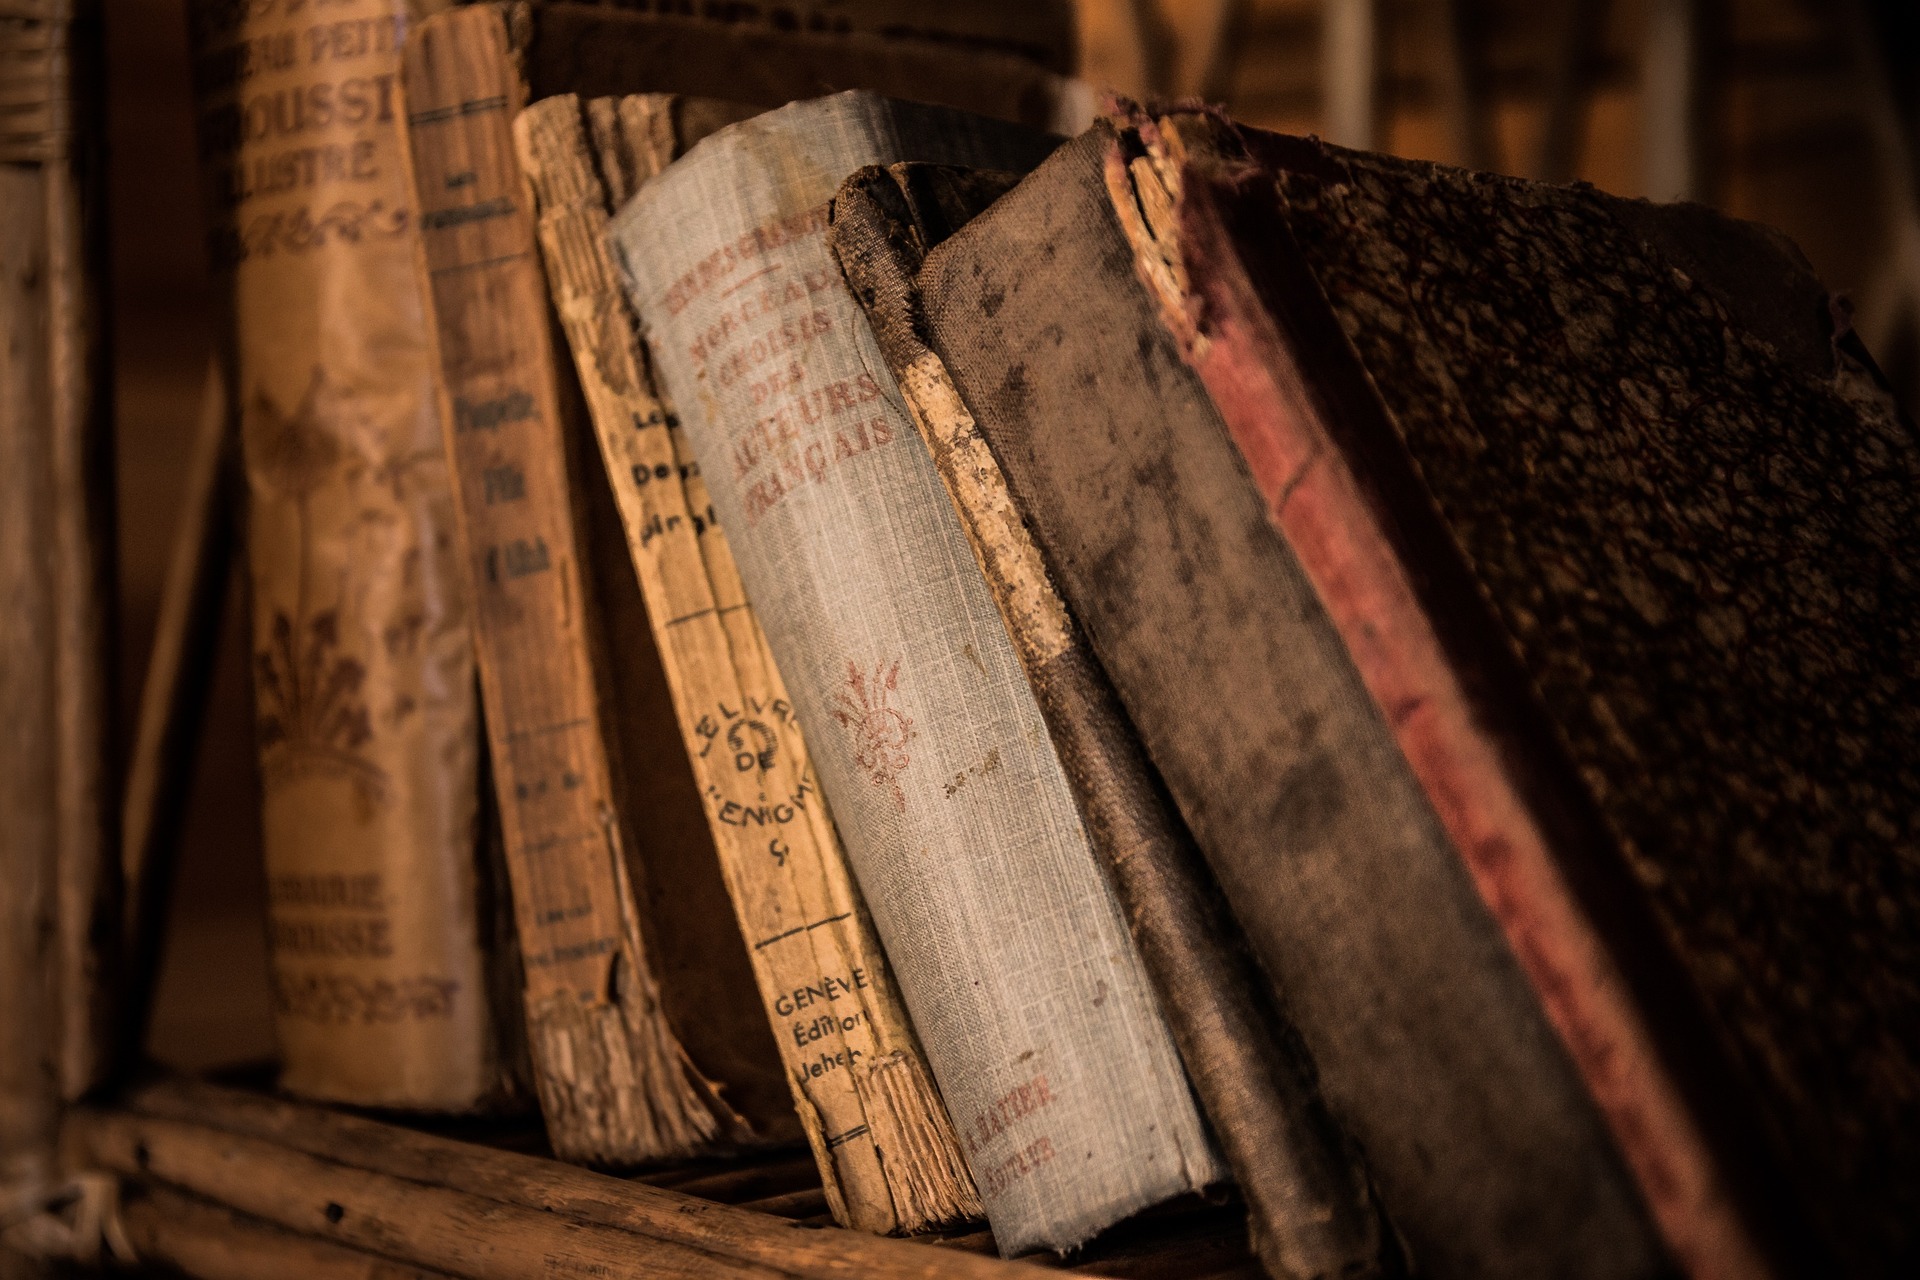 A short shelf of antique-looking books